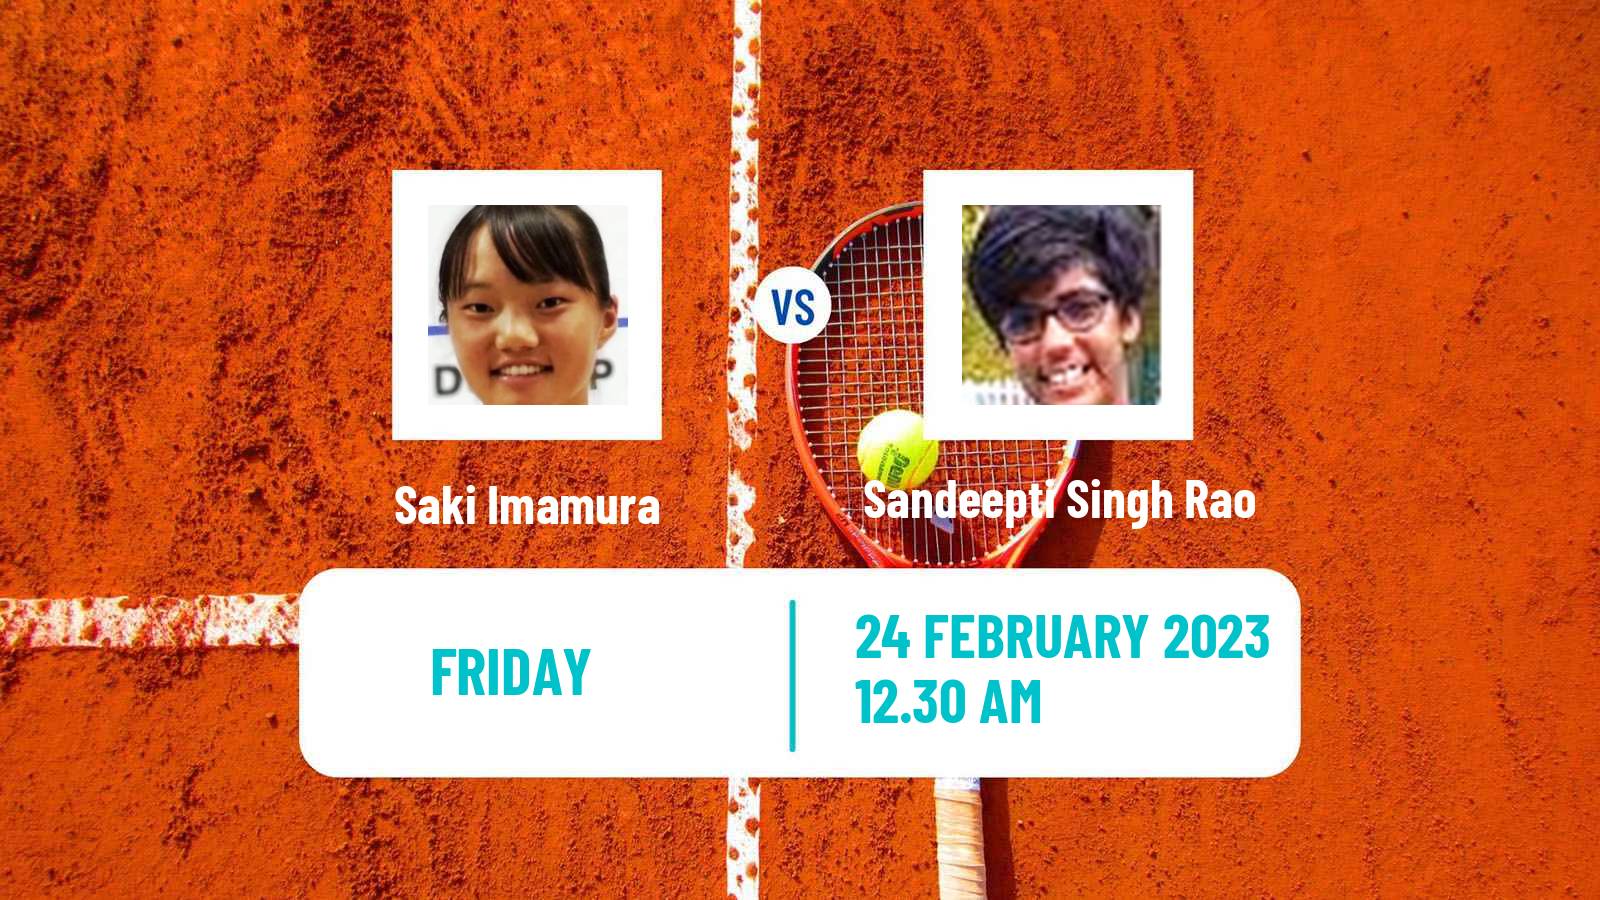 Tennis ITF Tournaments Saki Imamura - Sandeepti Singh Rao